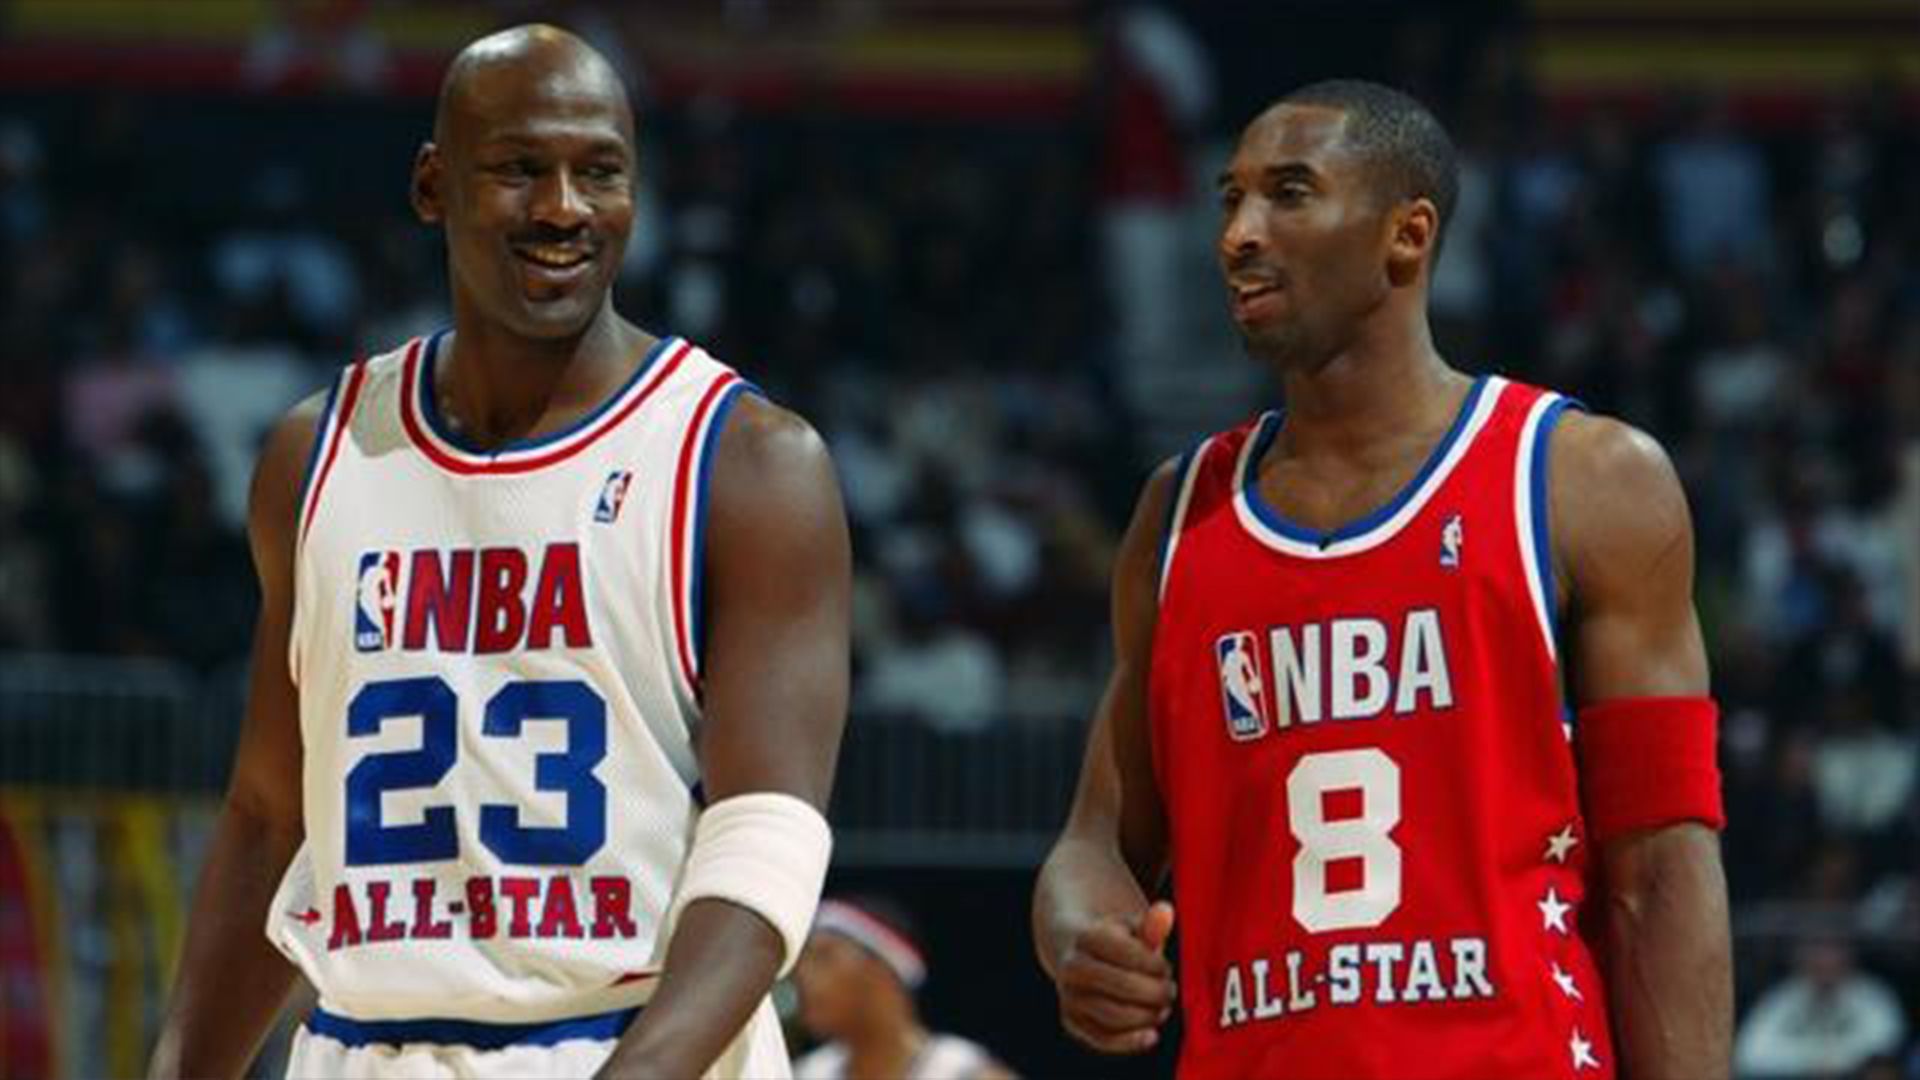 Last Dance' Episodes 5 & 6: Kobe Bryant appears, Michael Jordan's